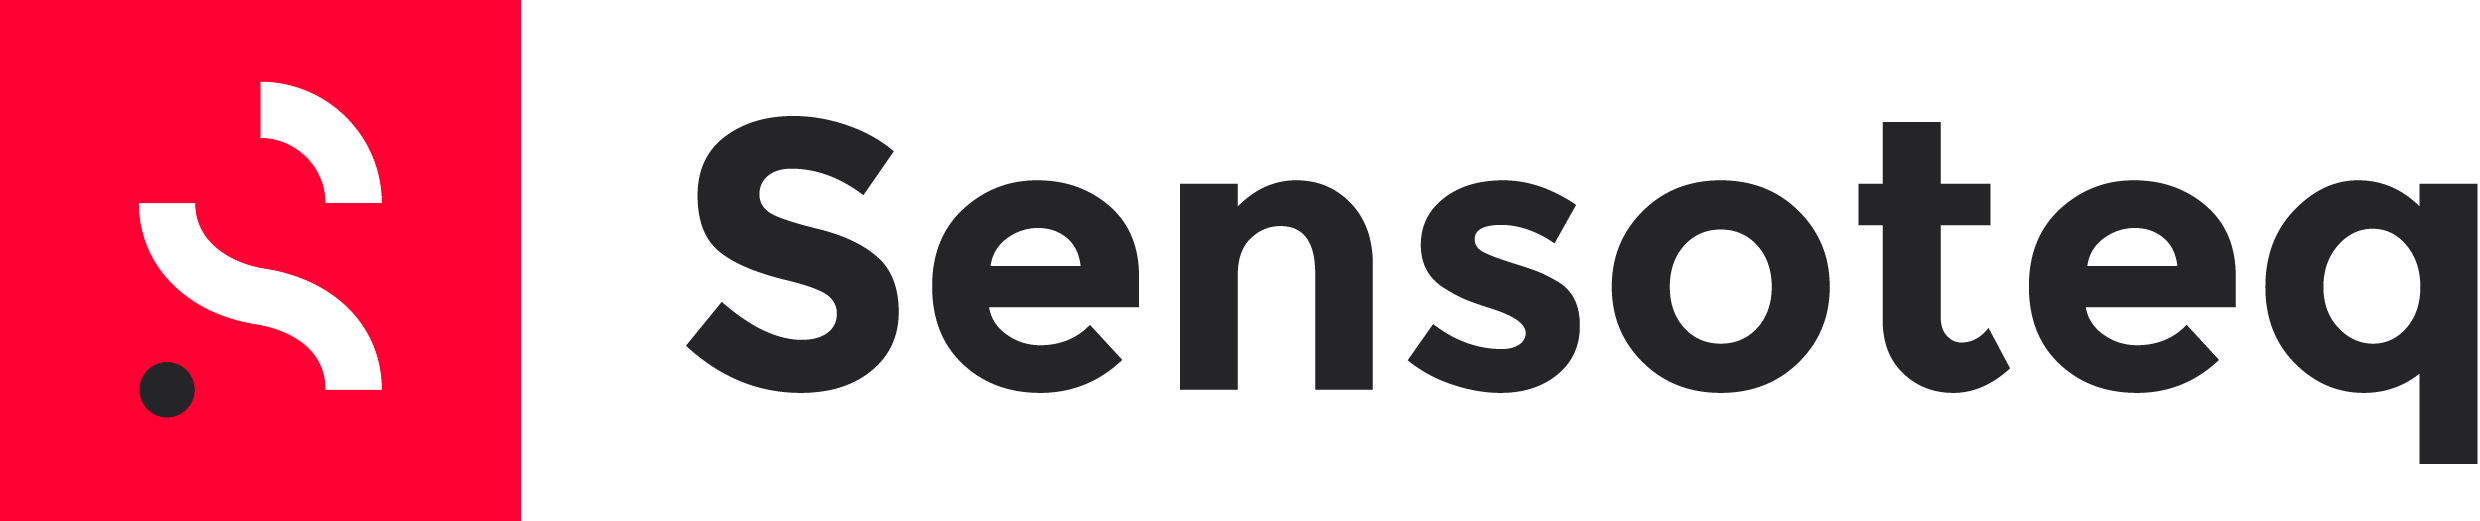 Sensoteq company logo